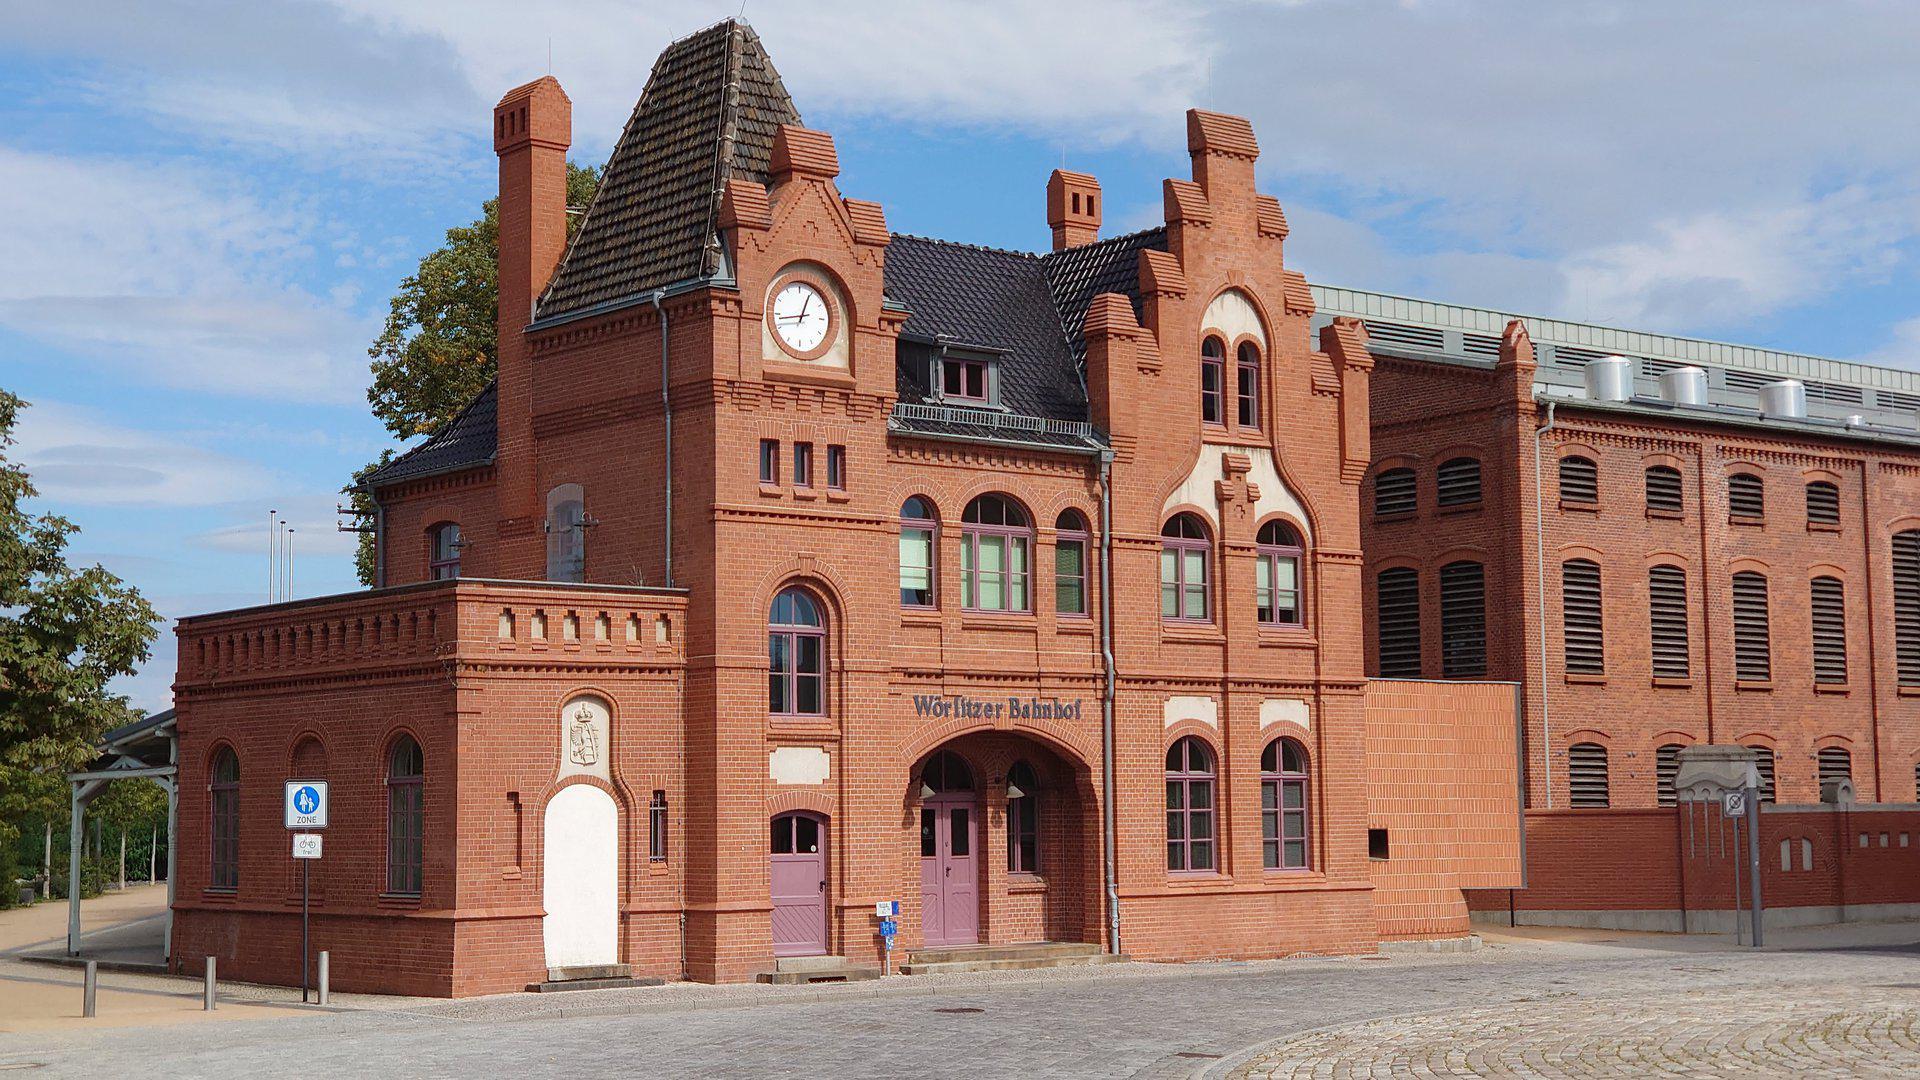 Dessau-Wörlitzer Bahnhof